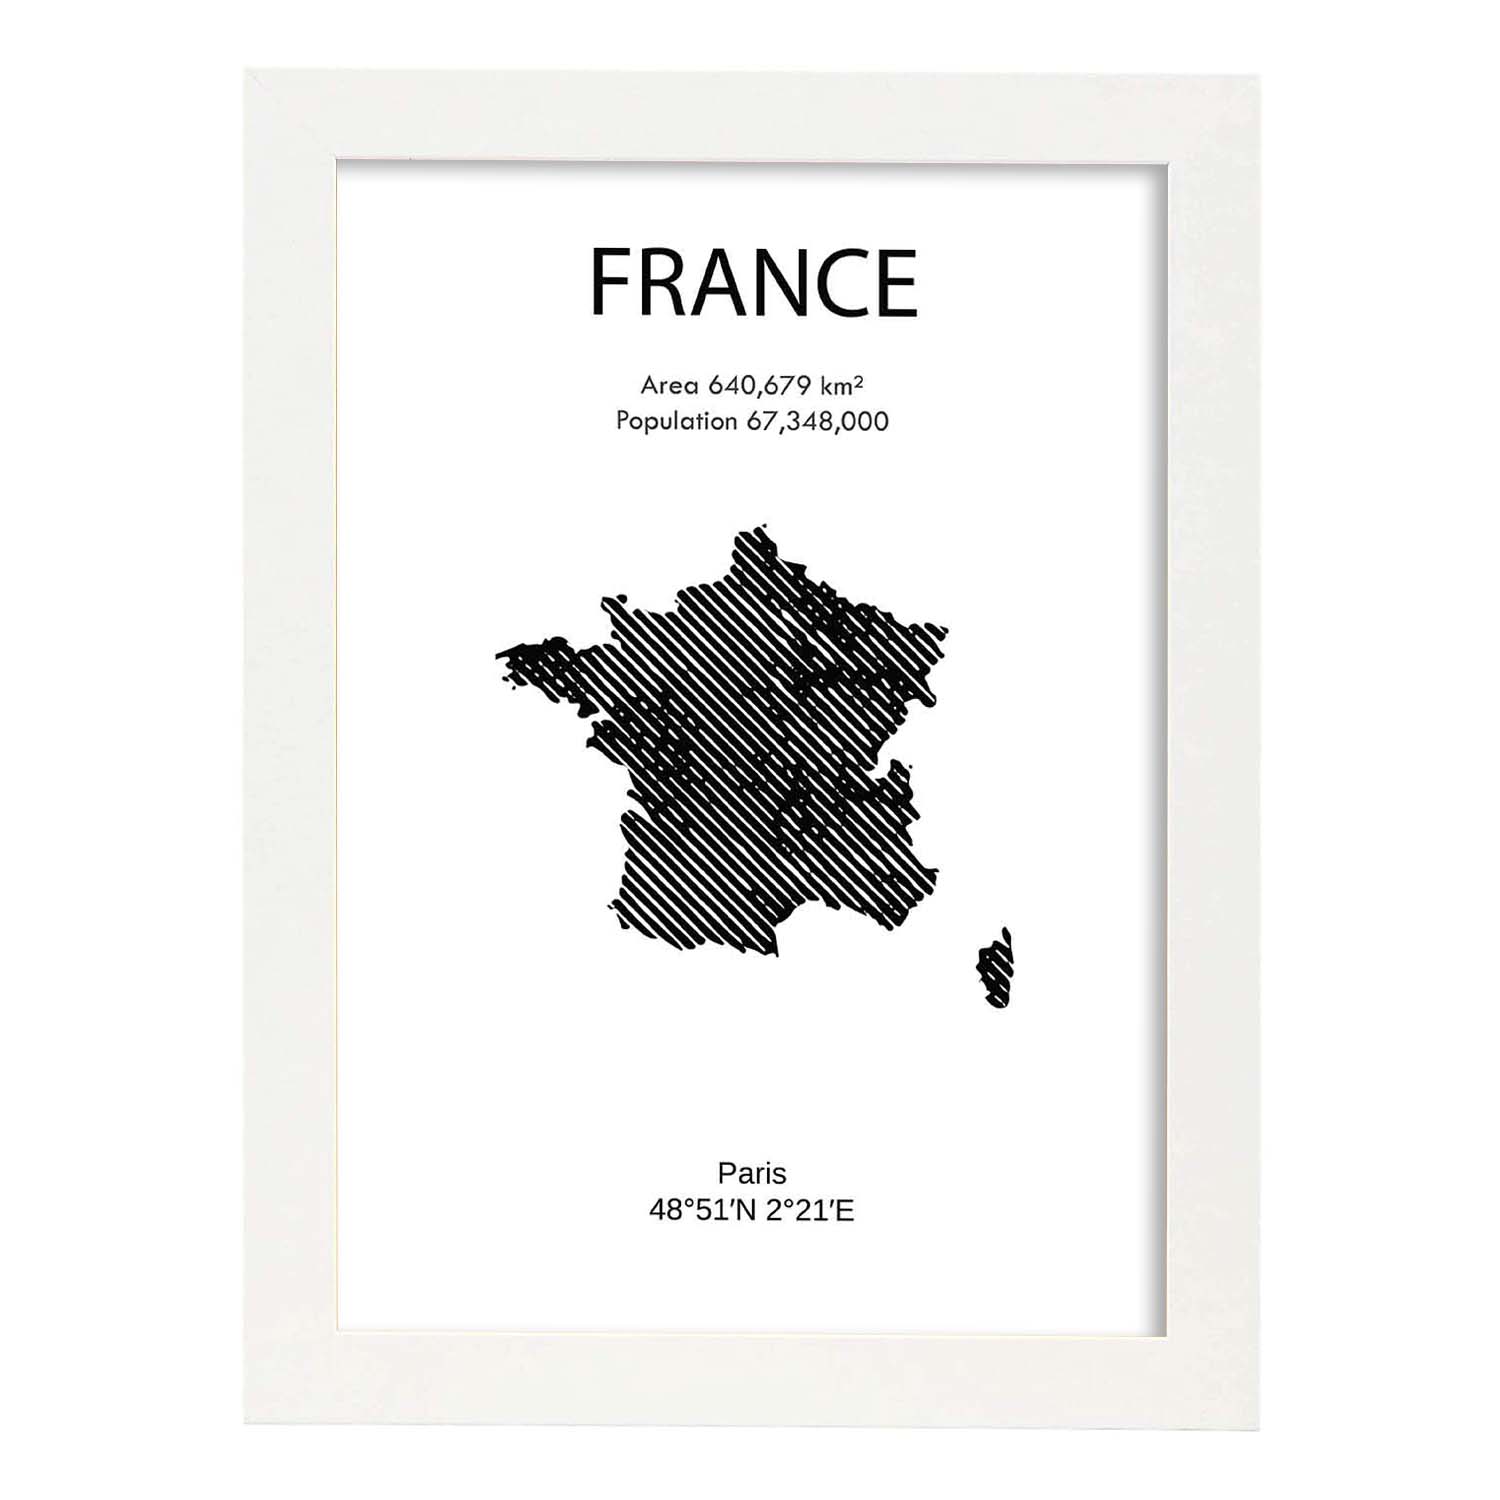 Poster de Francia. Láminas de paises y continentes del mundo.-Artwork-Nacnic-A4-Marco Blanco-Nacnic Estudio SL